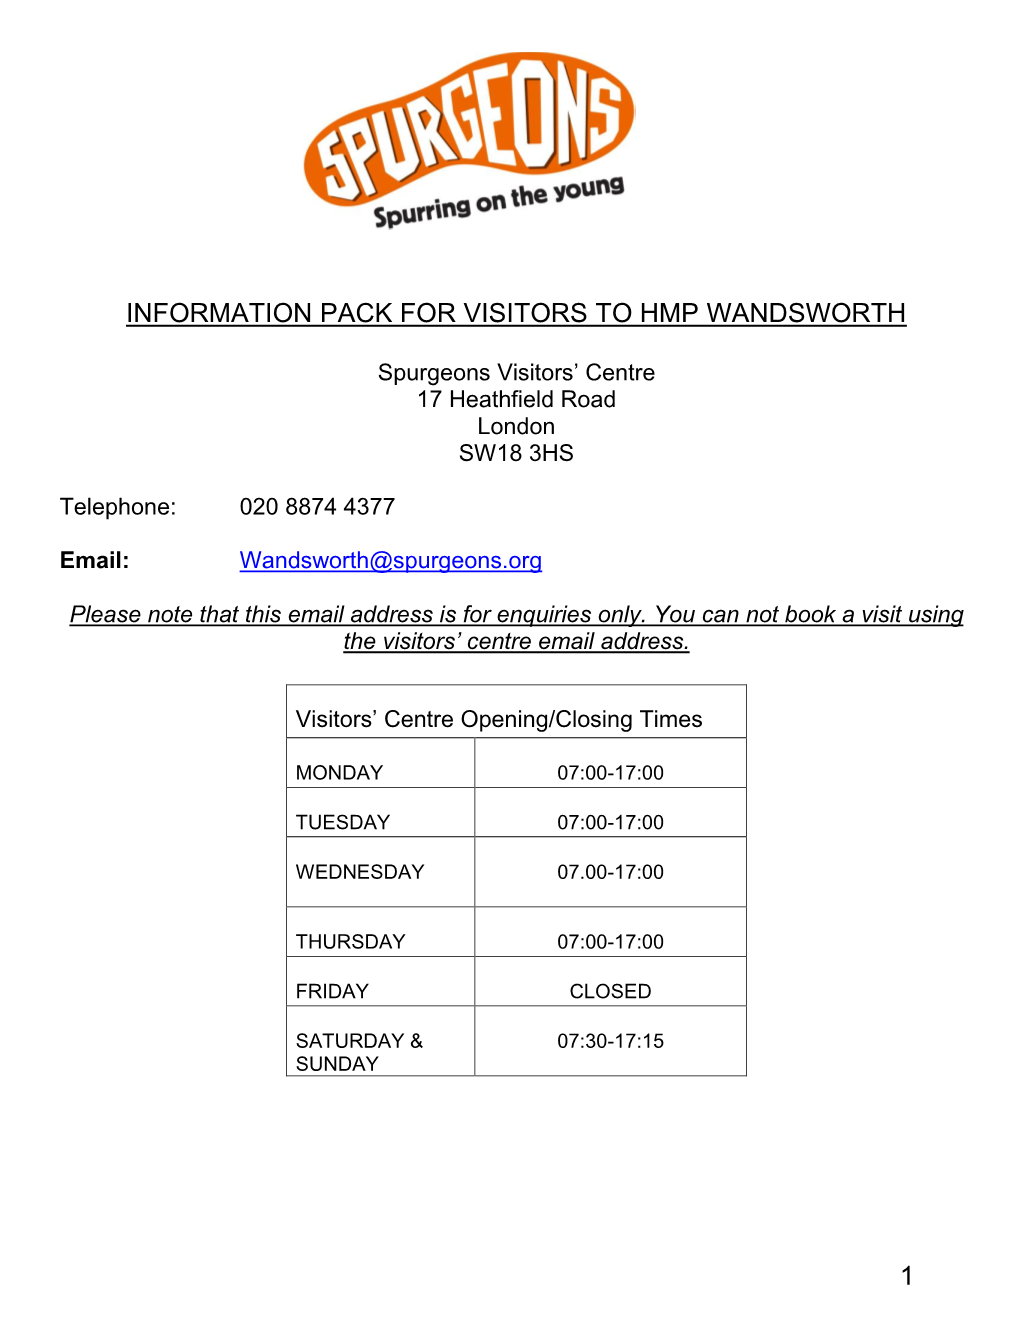 Information Pack for Visitors to Hmp Wandsworth 1